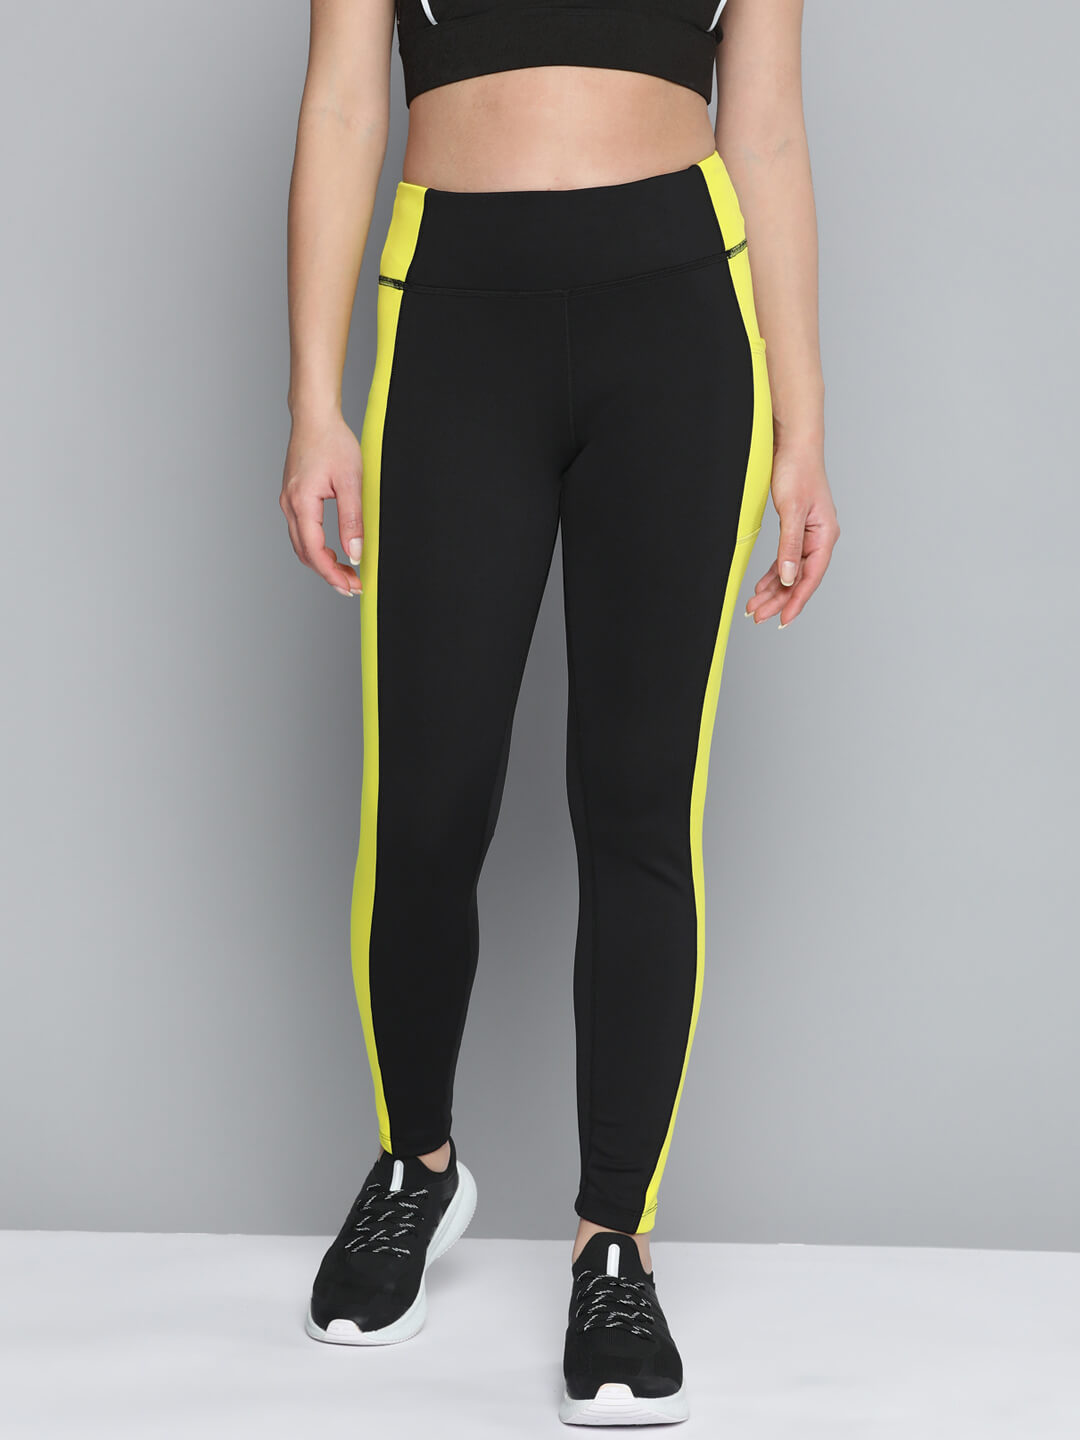 Alcis Women Black Yellow Colorblocked Sports Tights